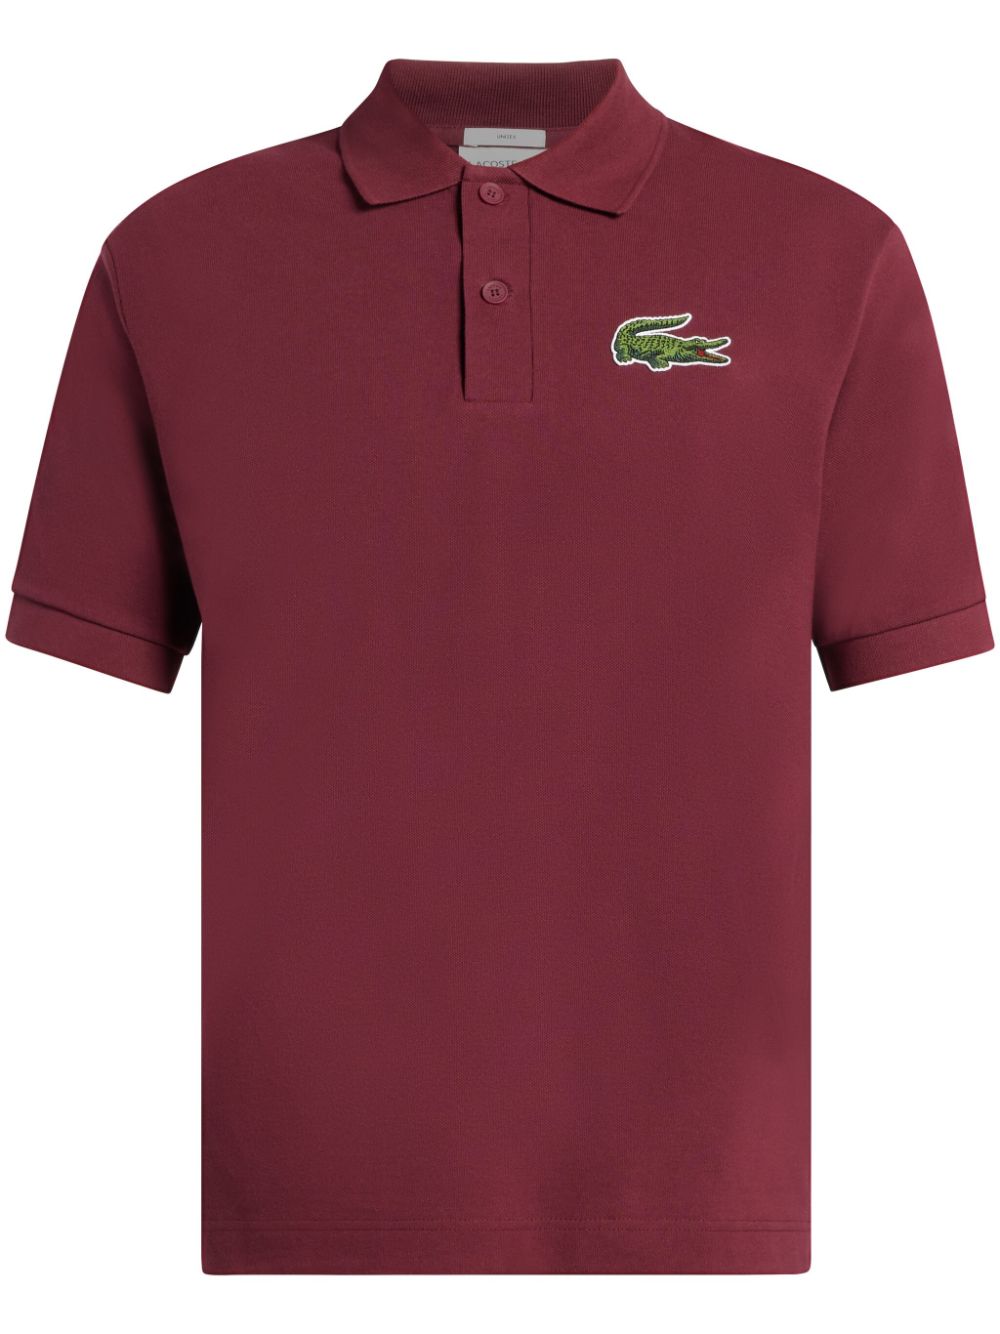 Lacoste alligator logo appliqué polo shirt - Red von Lacoste